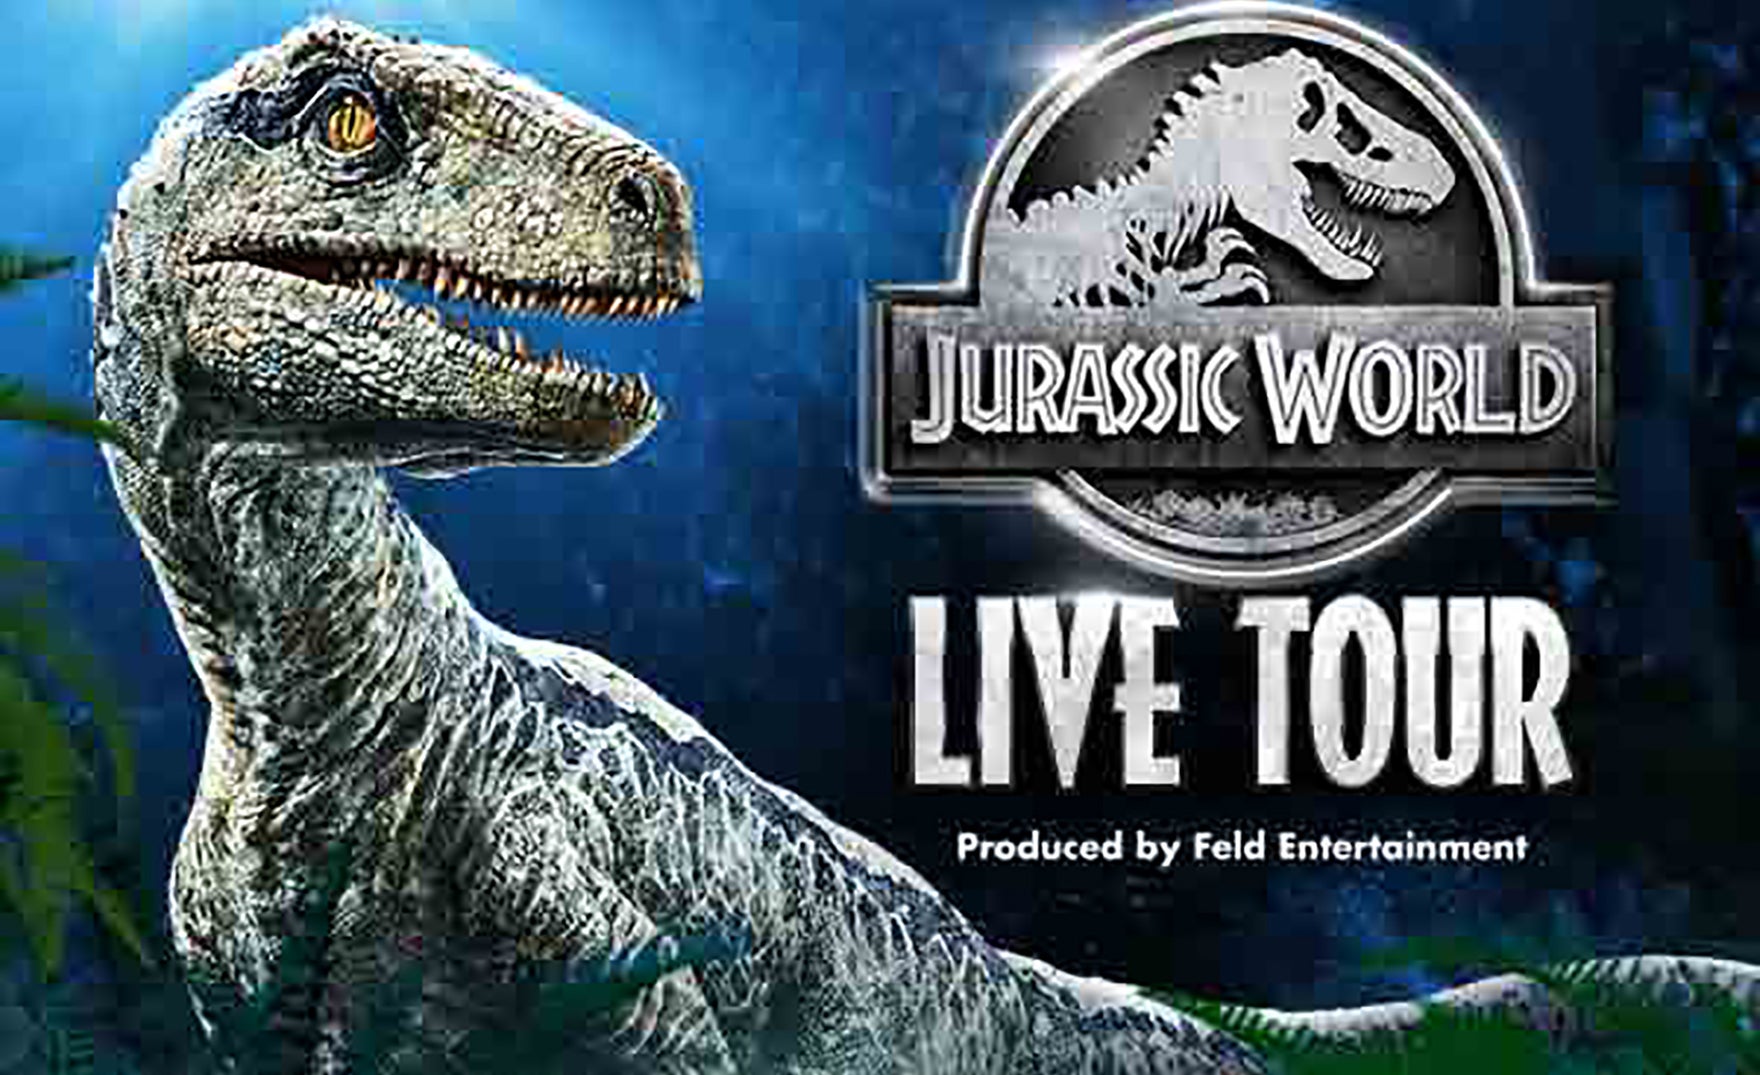 Jurassic World Live